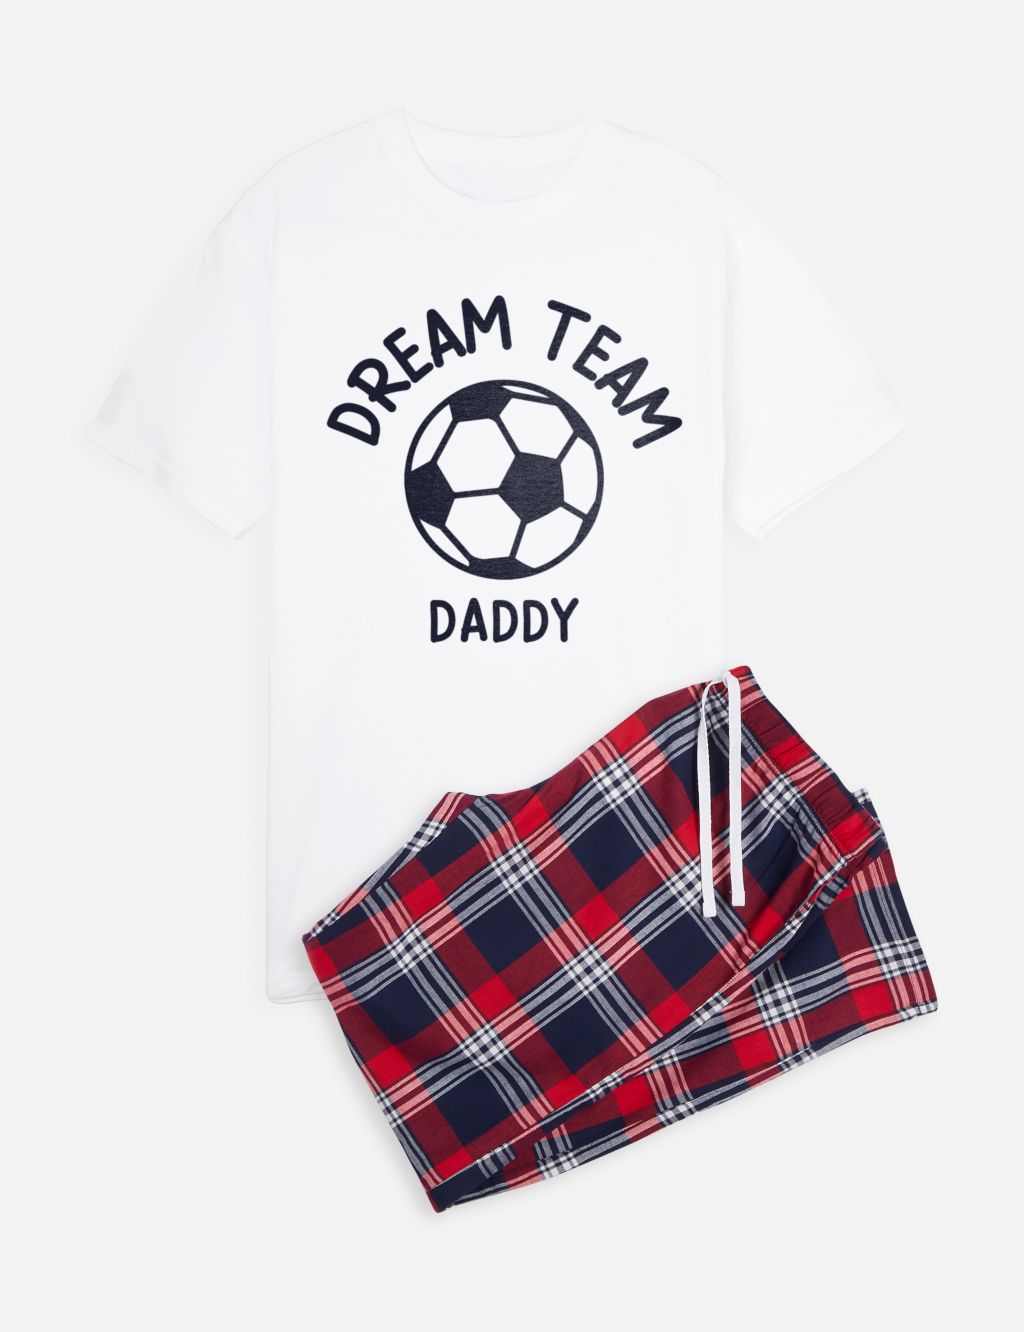 Personalised Men's Football Pyjamas